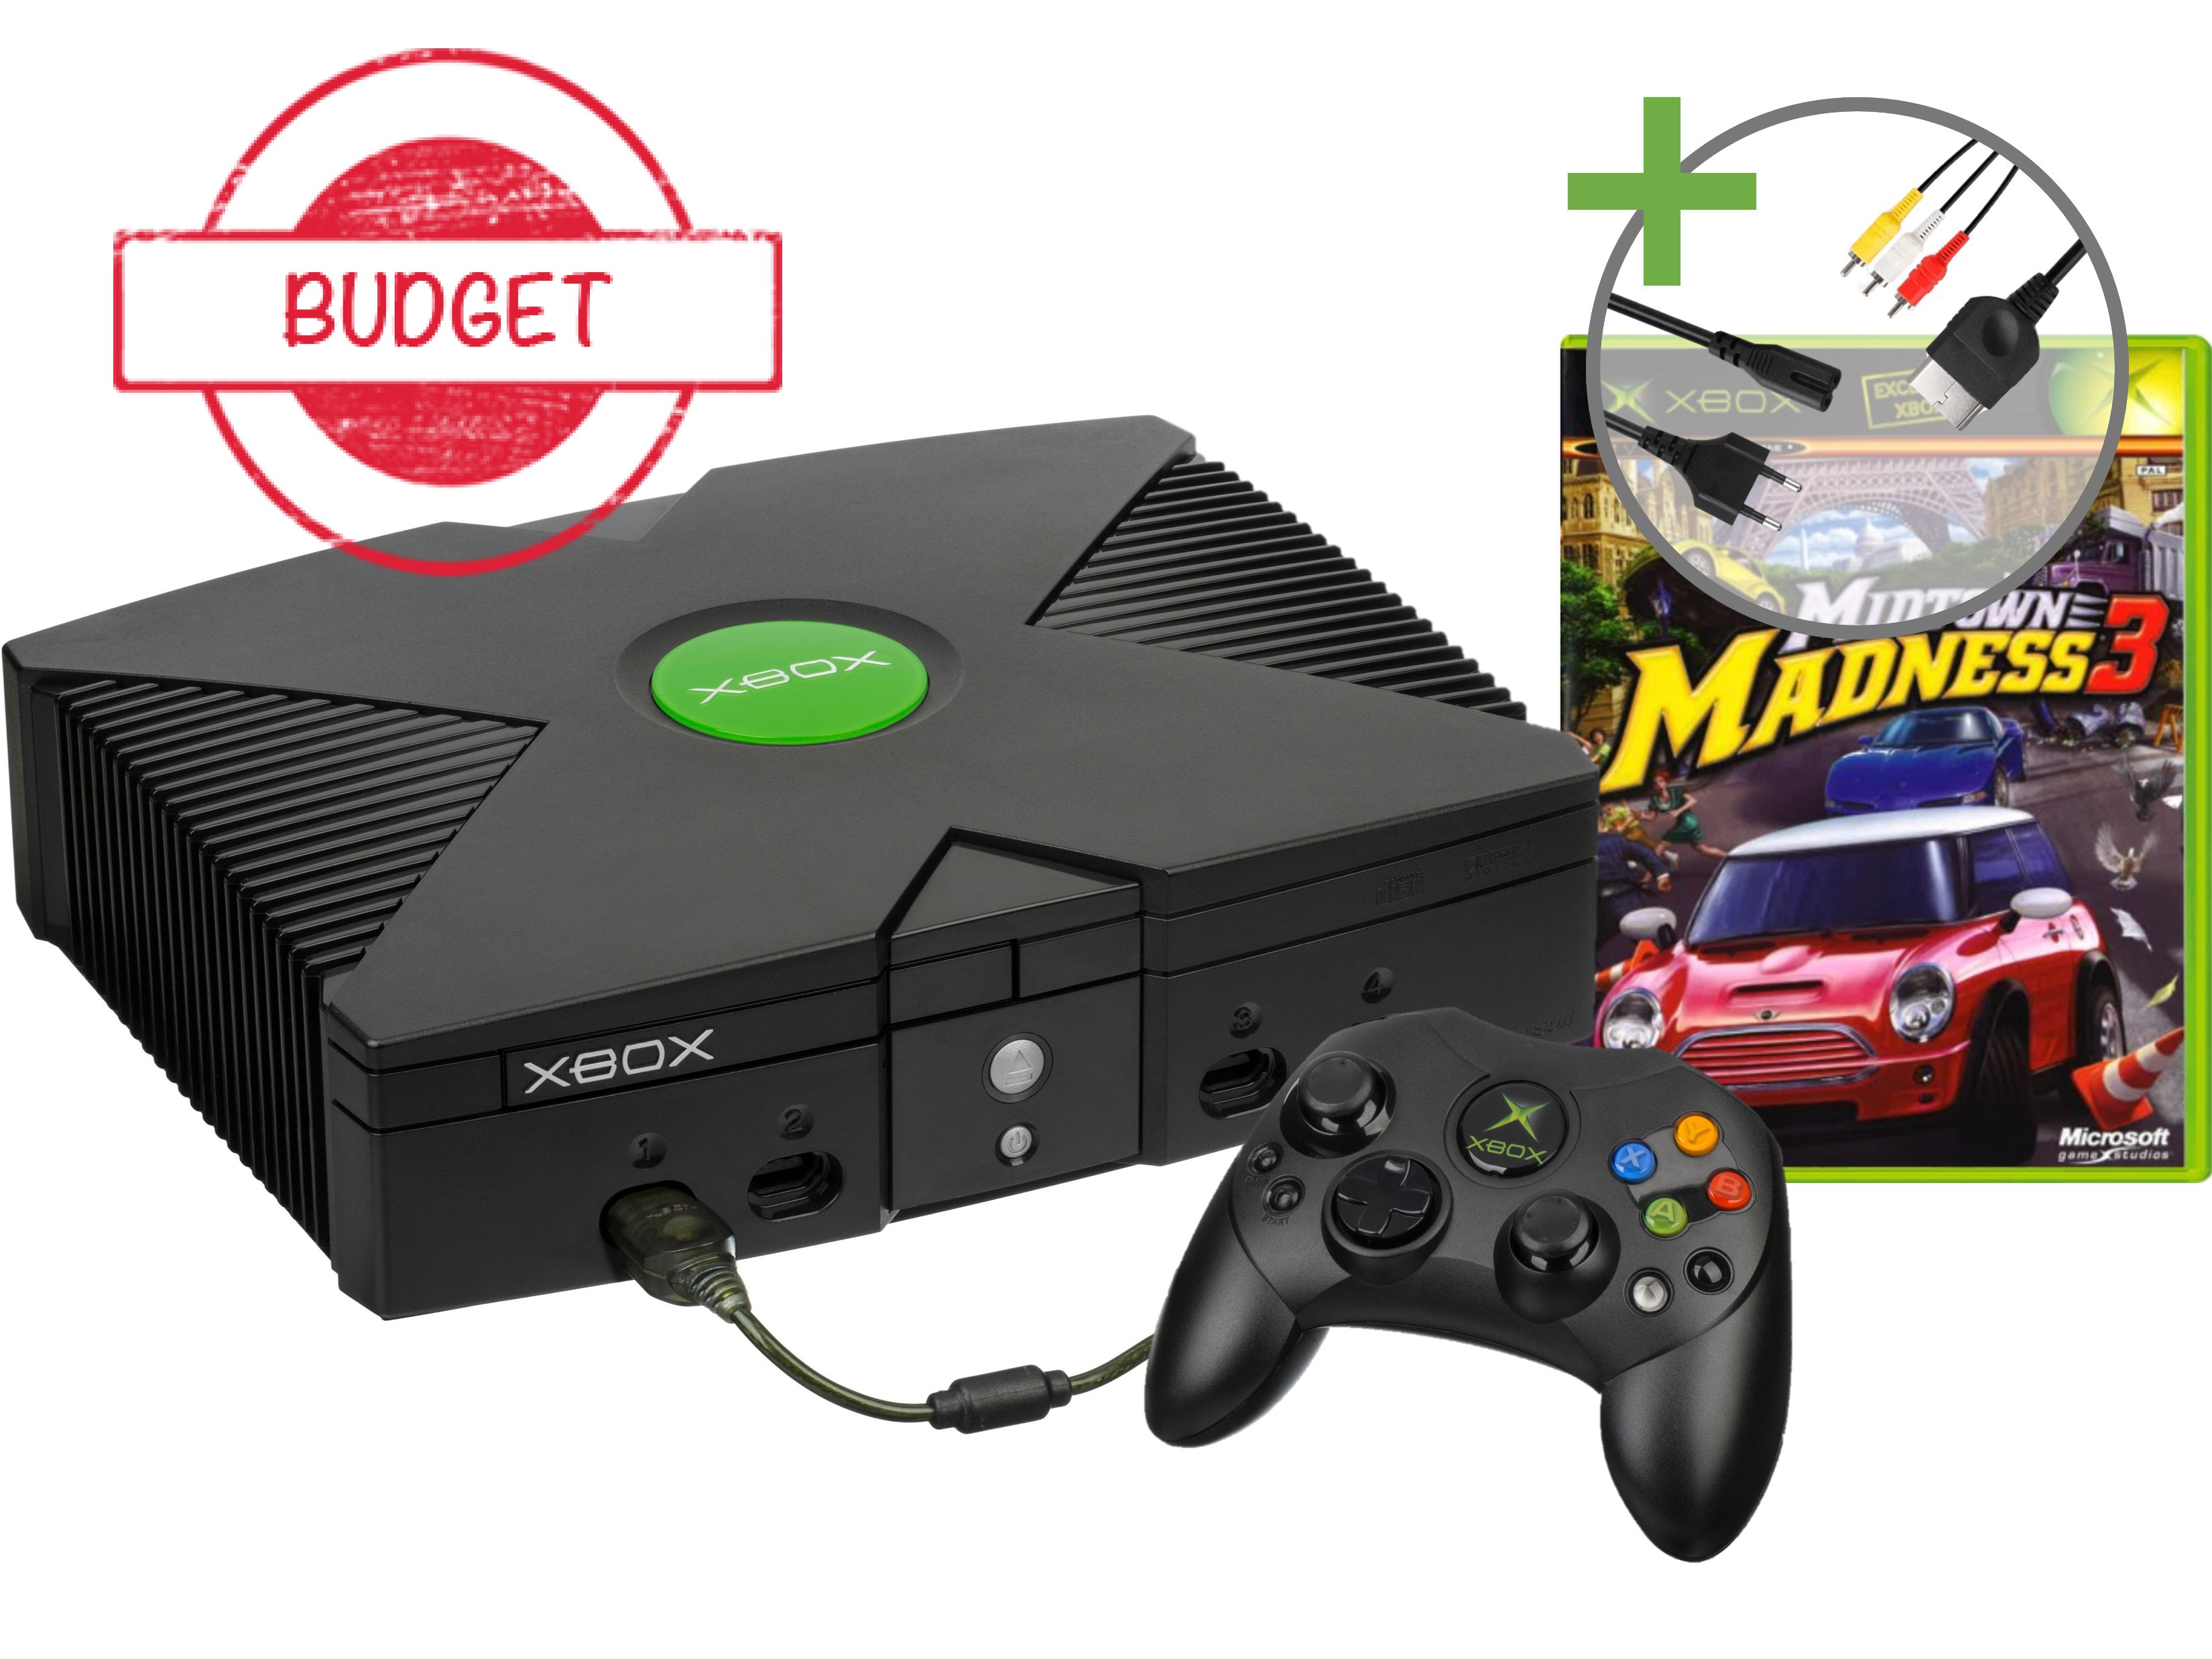 Microsoft Xbox Classic Starter Pack - Midtown Madness 3 Edition - Budget - Xbox Original Hardware